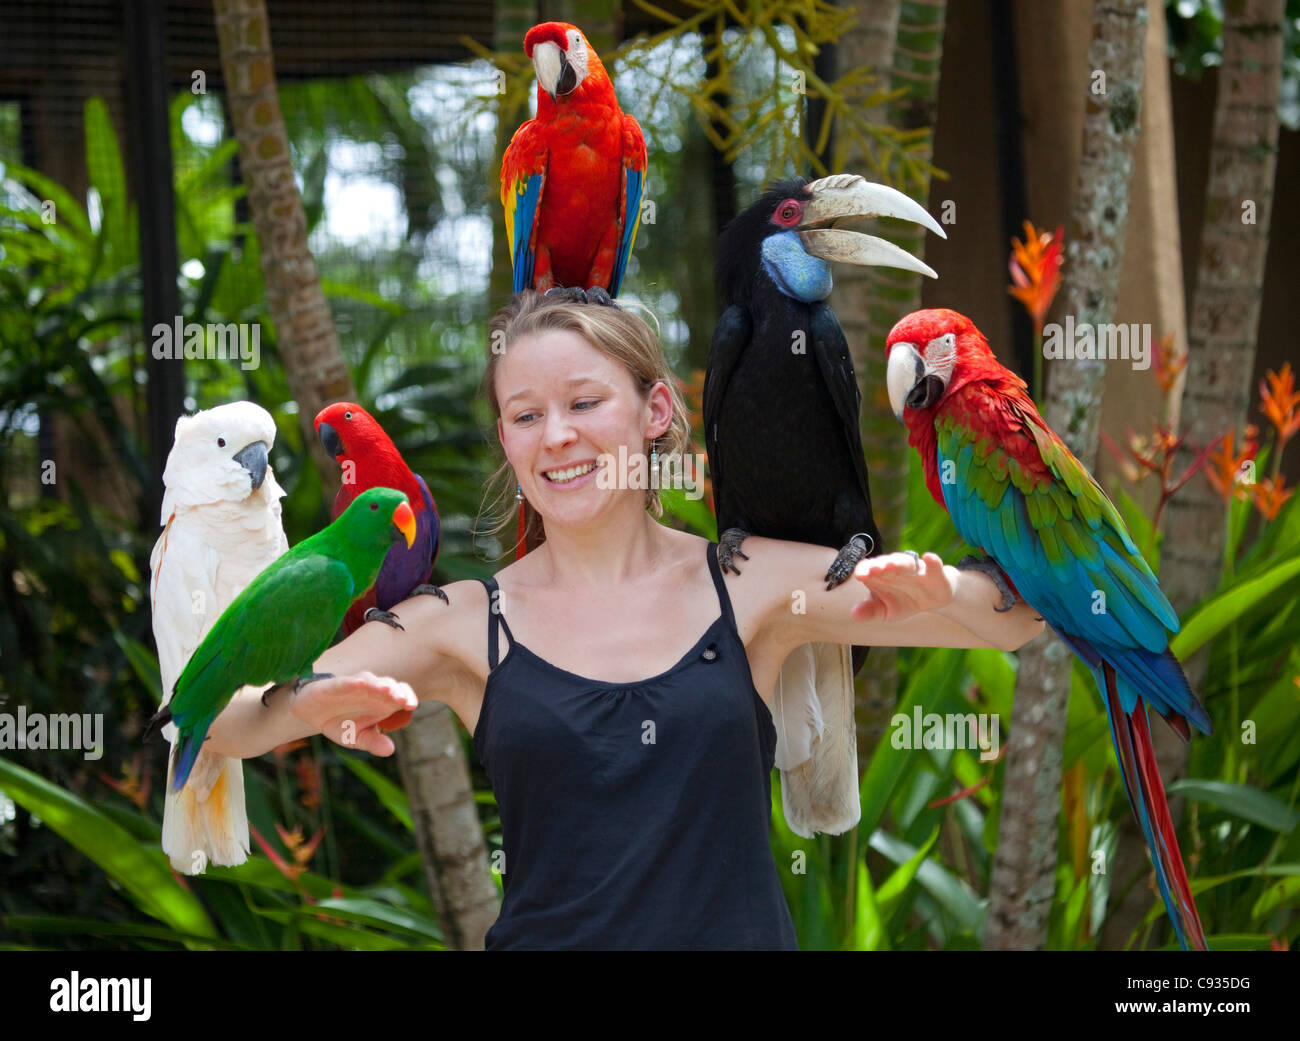 Bali, Ubud. A tourist poses with an assortment of birds at Bali Bird Park. MR Stock Photo